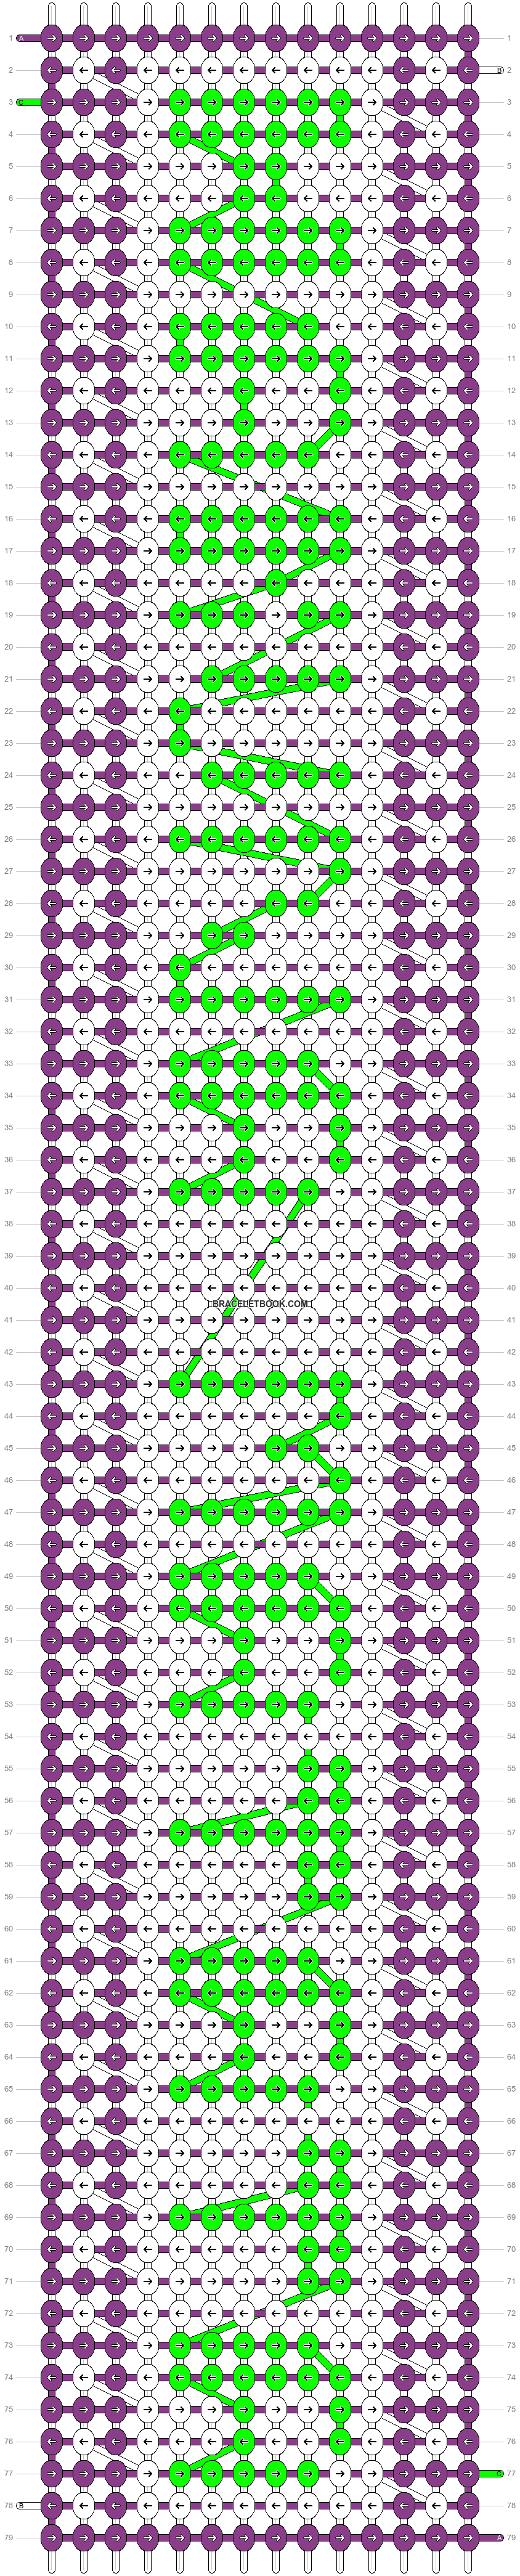 Alpha pattern #14438 variation #11433 pattern